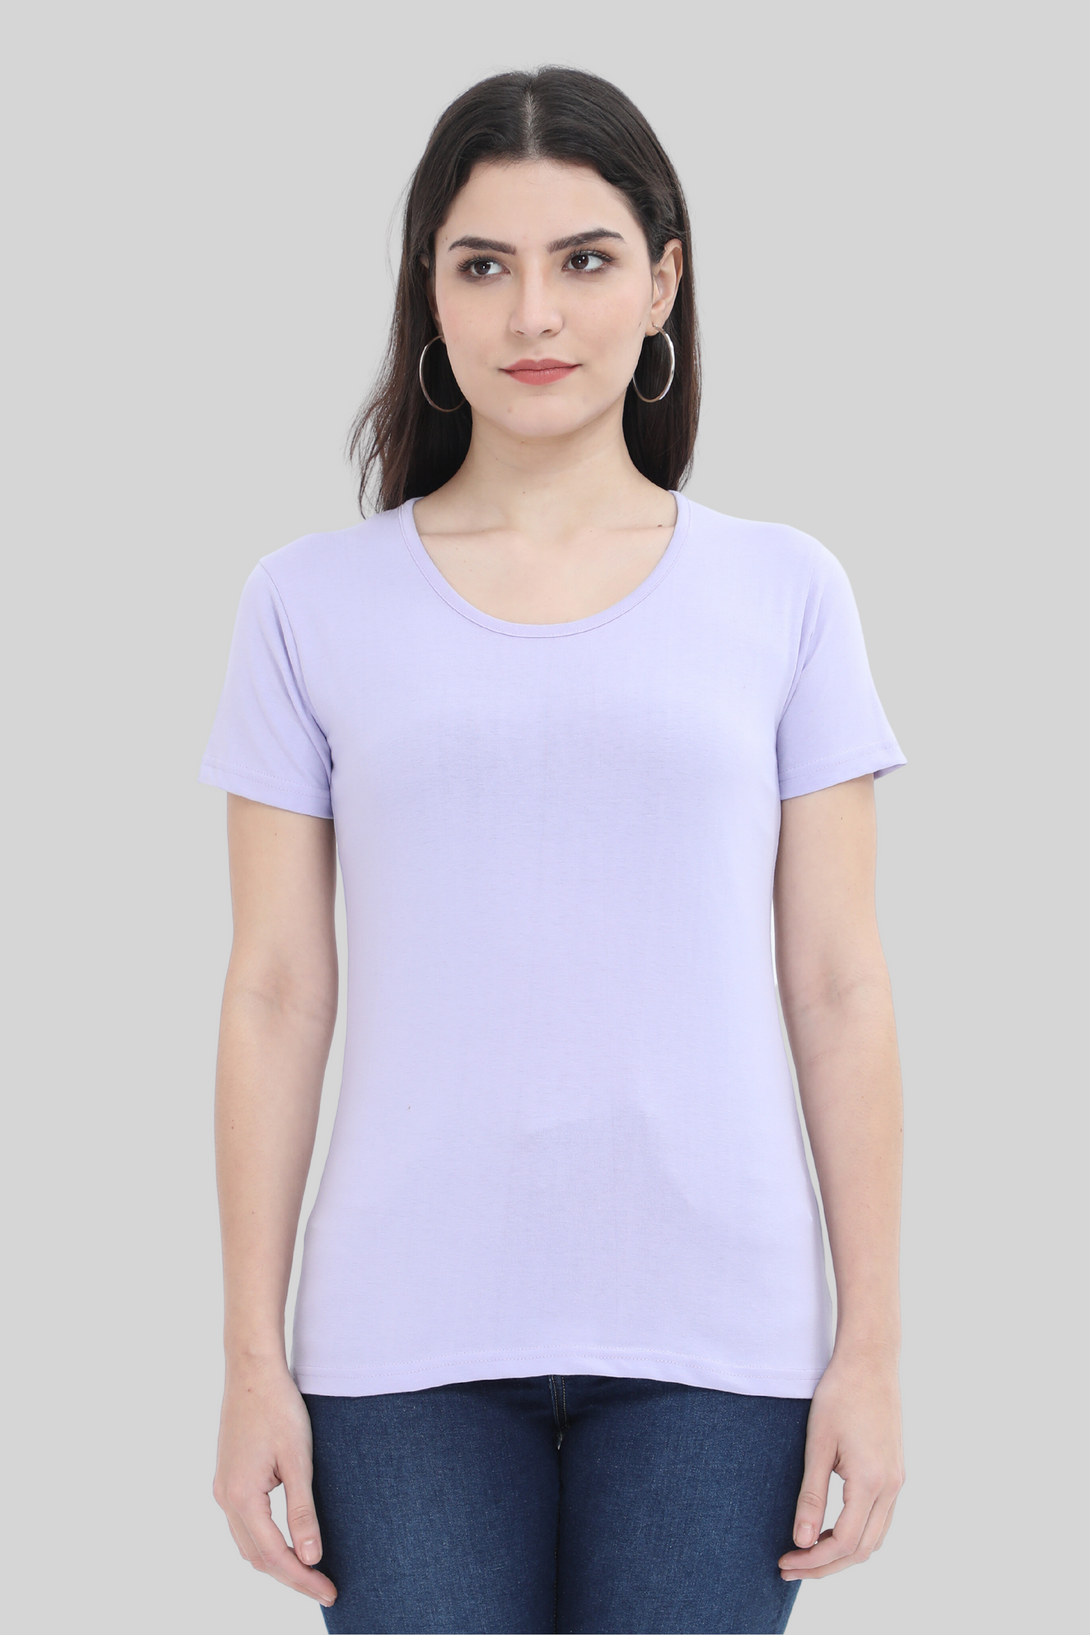 Lavender Scoop Neck T-Shirt For Women - WowWaves - 3